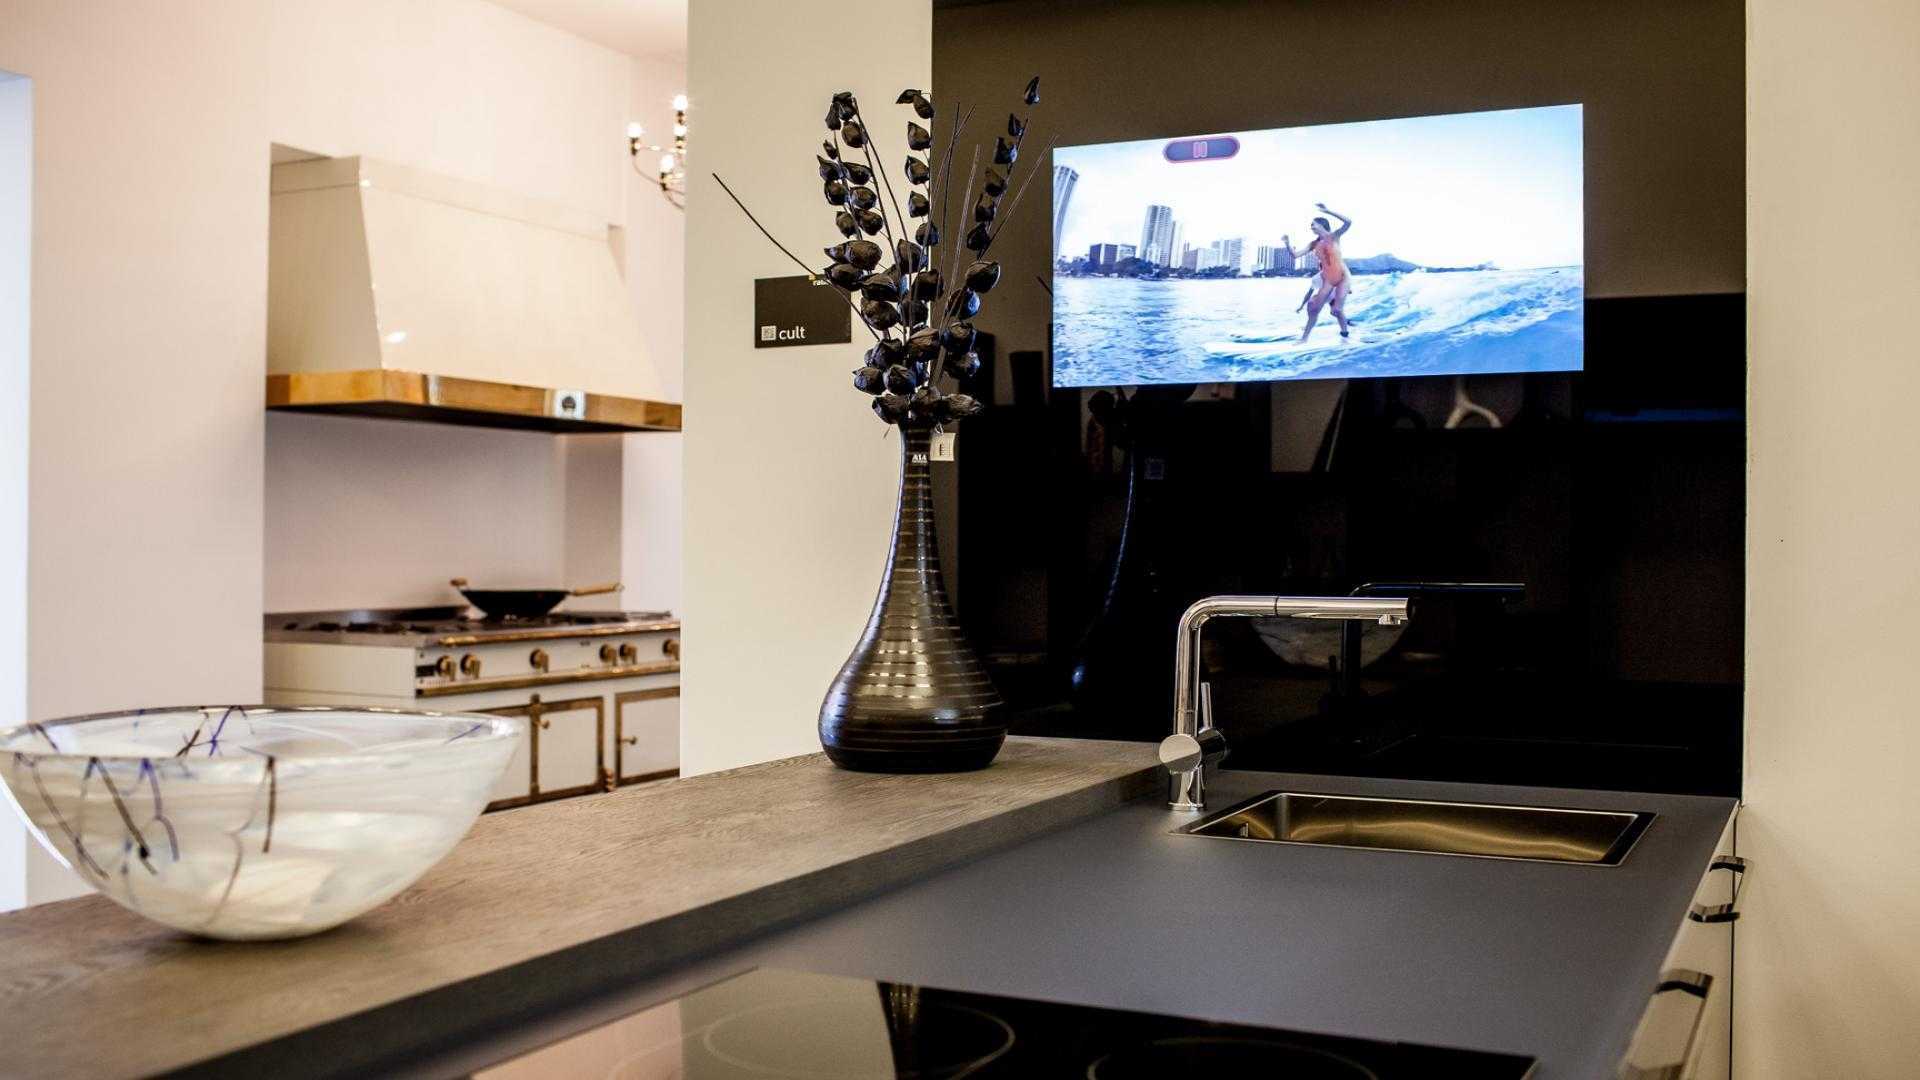 Телевизор для кухни 20. Телевизор на кухню со Smart TV 24 дюйма. Встраиваемый телевизор для кухни. Подвесной телевизор на кухню. Телевизор НАК кухню на стену.